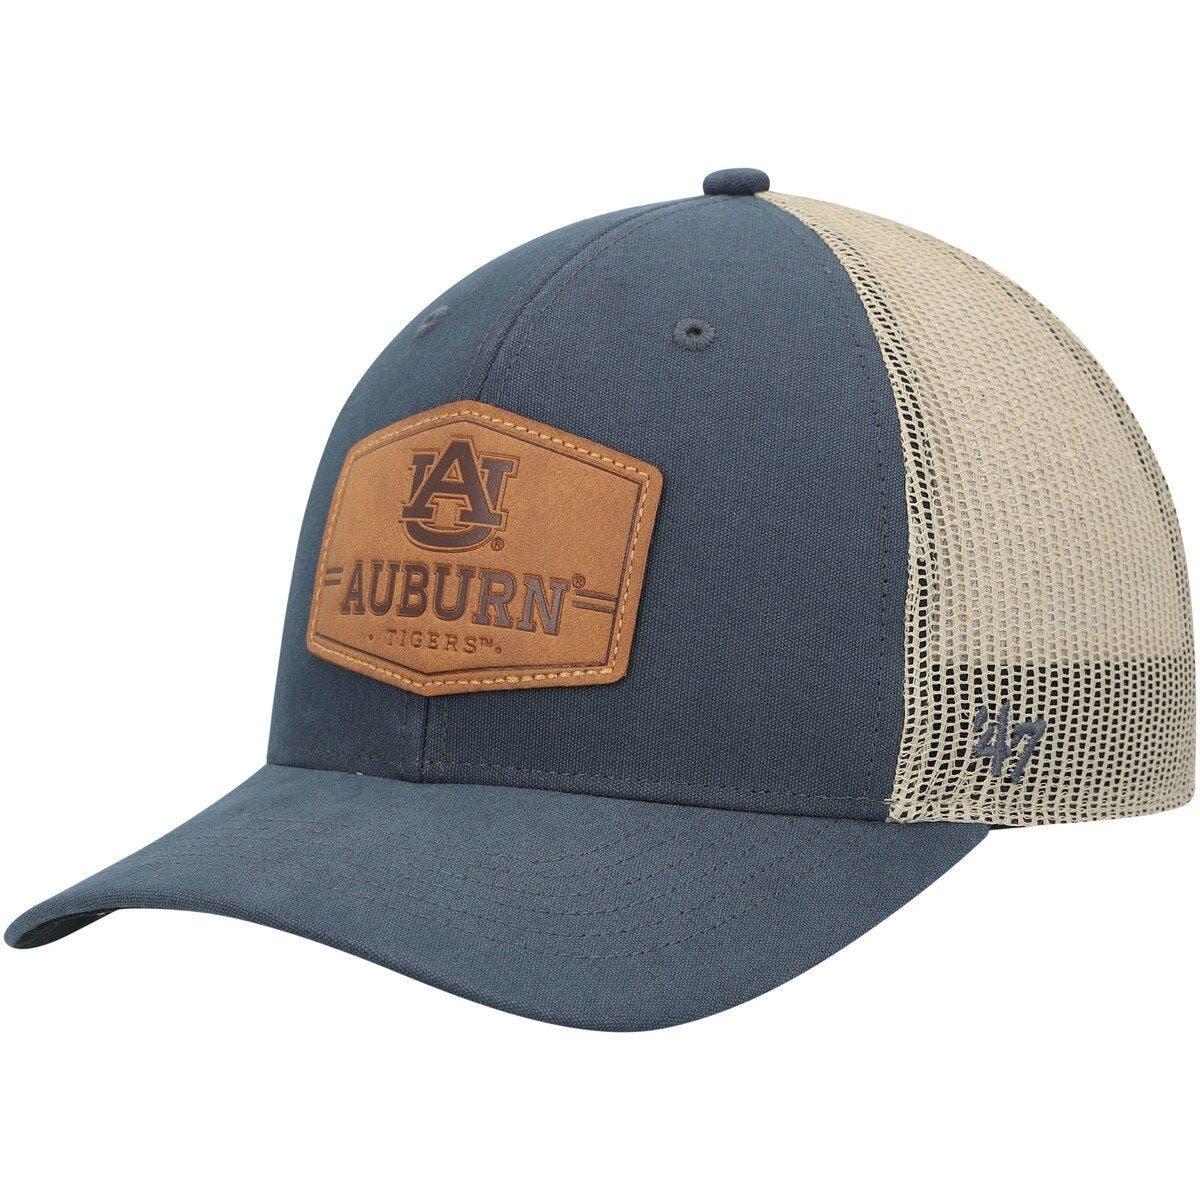 Men's '47 Light Blue Houston Oilers Legacy Franchise Fitted Hat